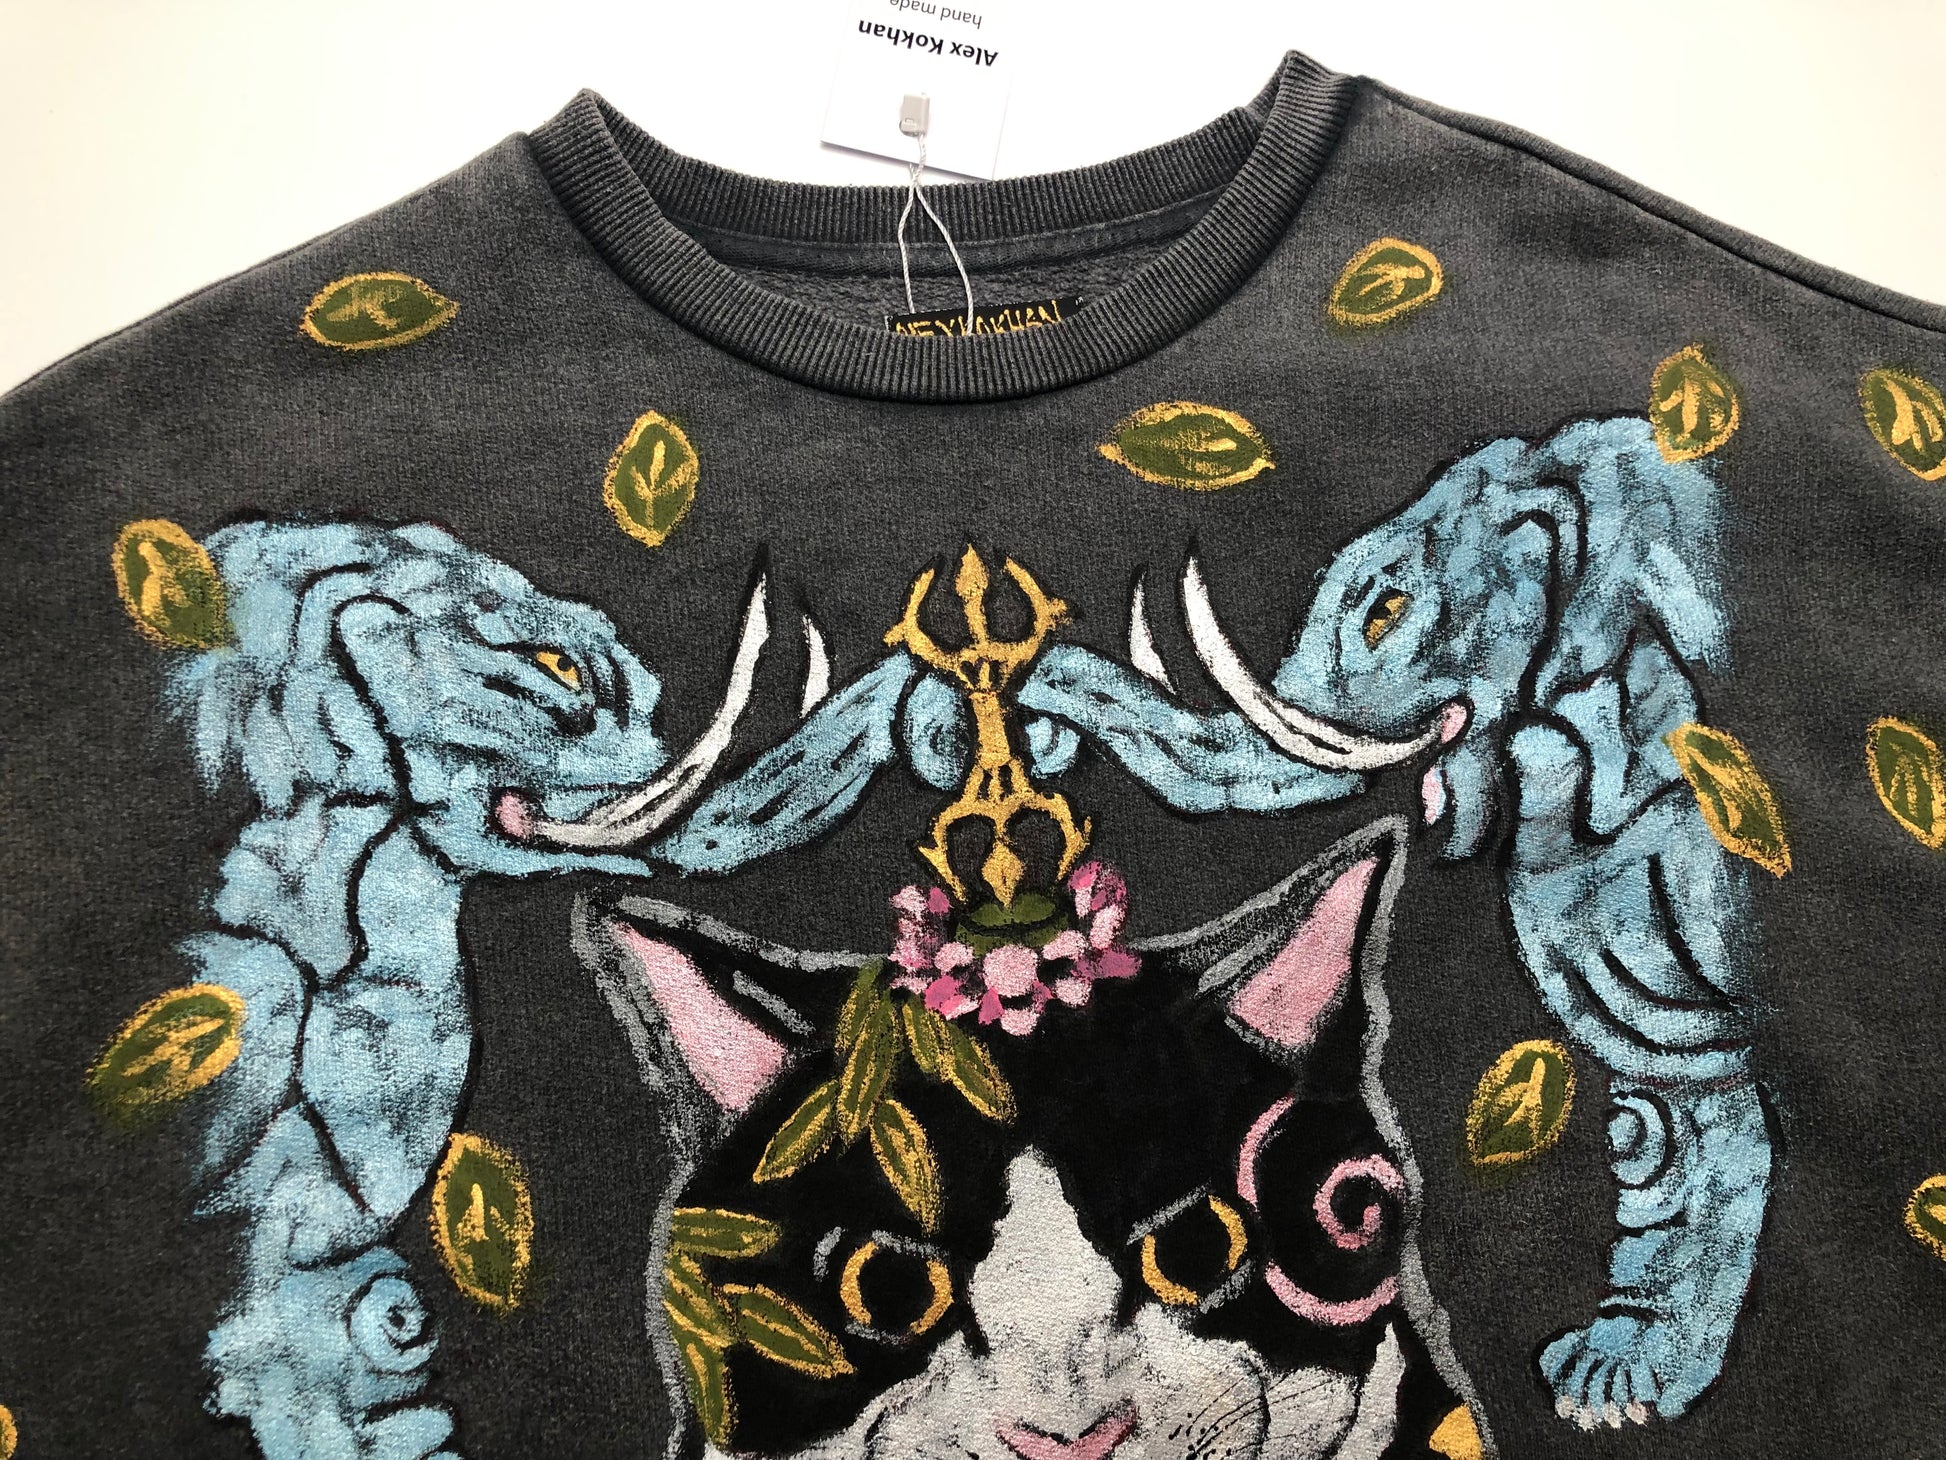 Women's sweatshirt oversized cat and elephants handmade pattern details